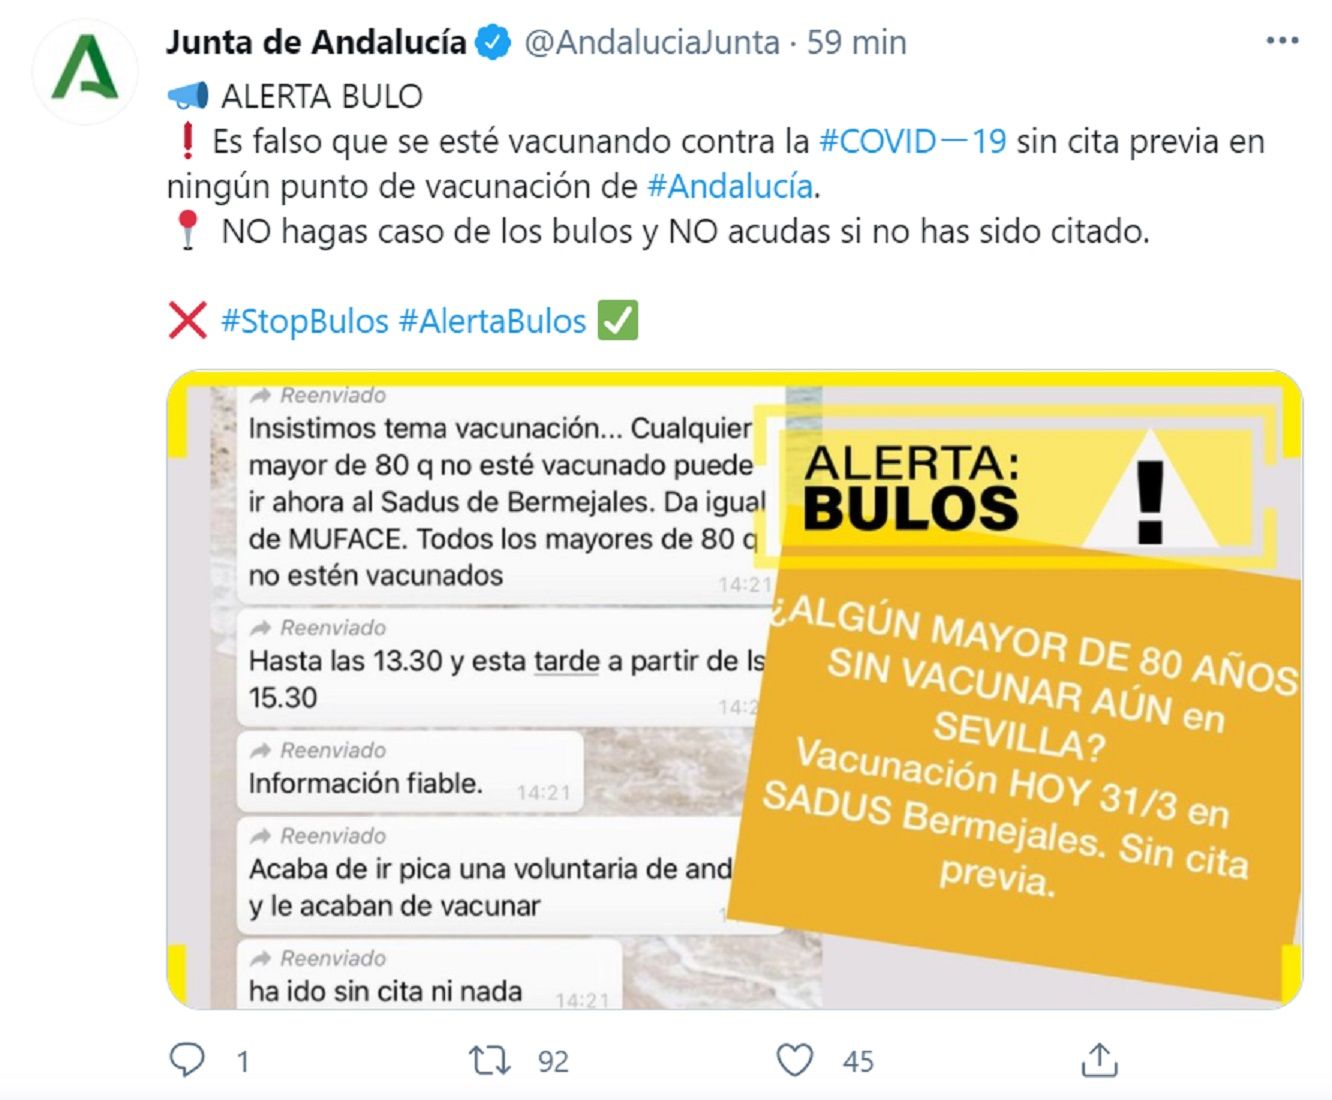 Junta d'Andalusia falòrnia / RRSS